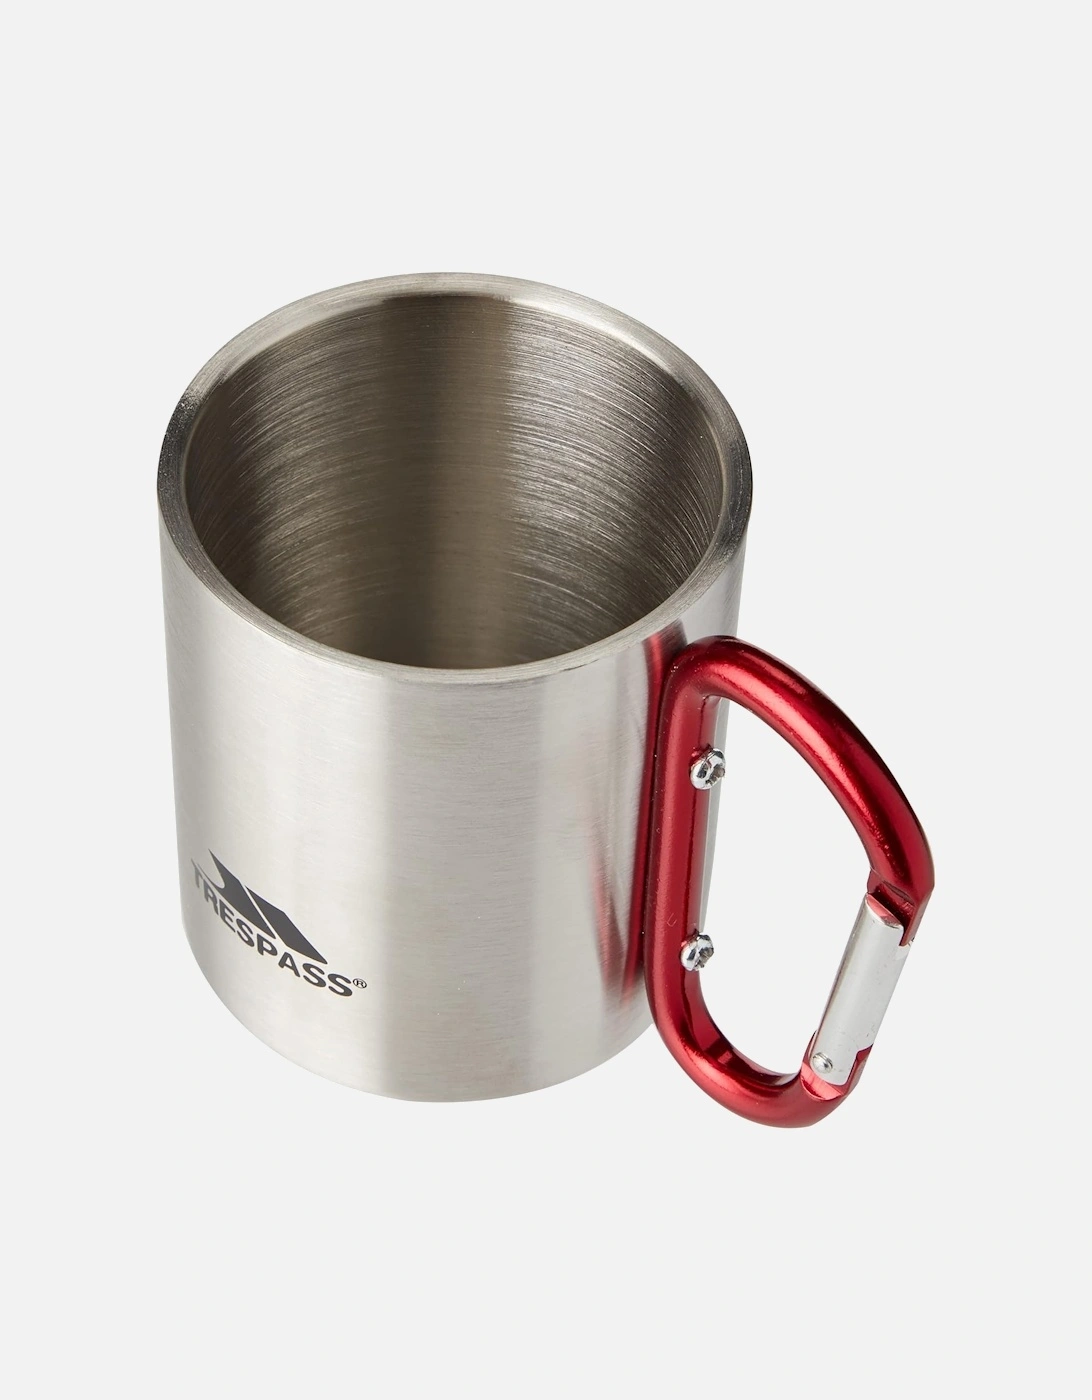 Bruski Carabiner Clip Travel Cup/Mug